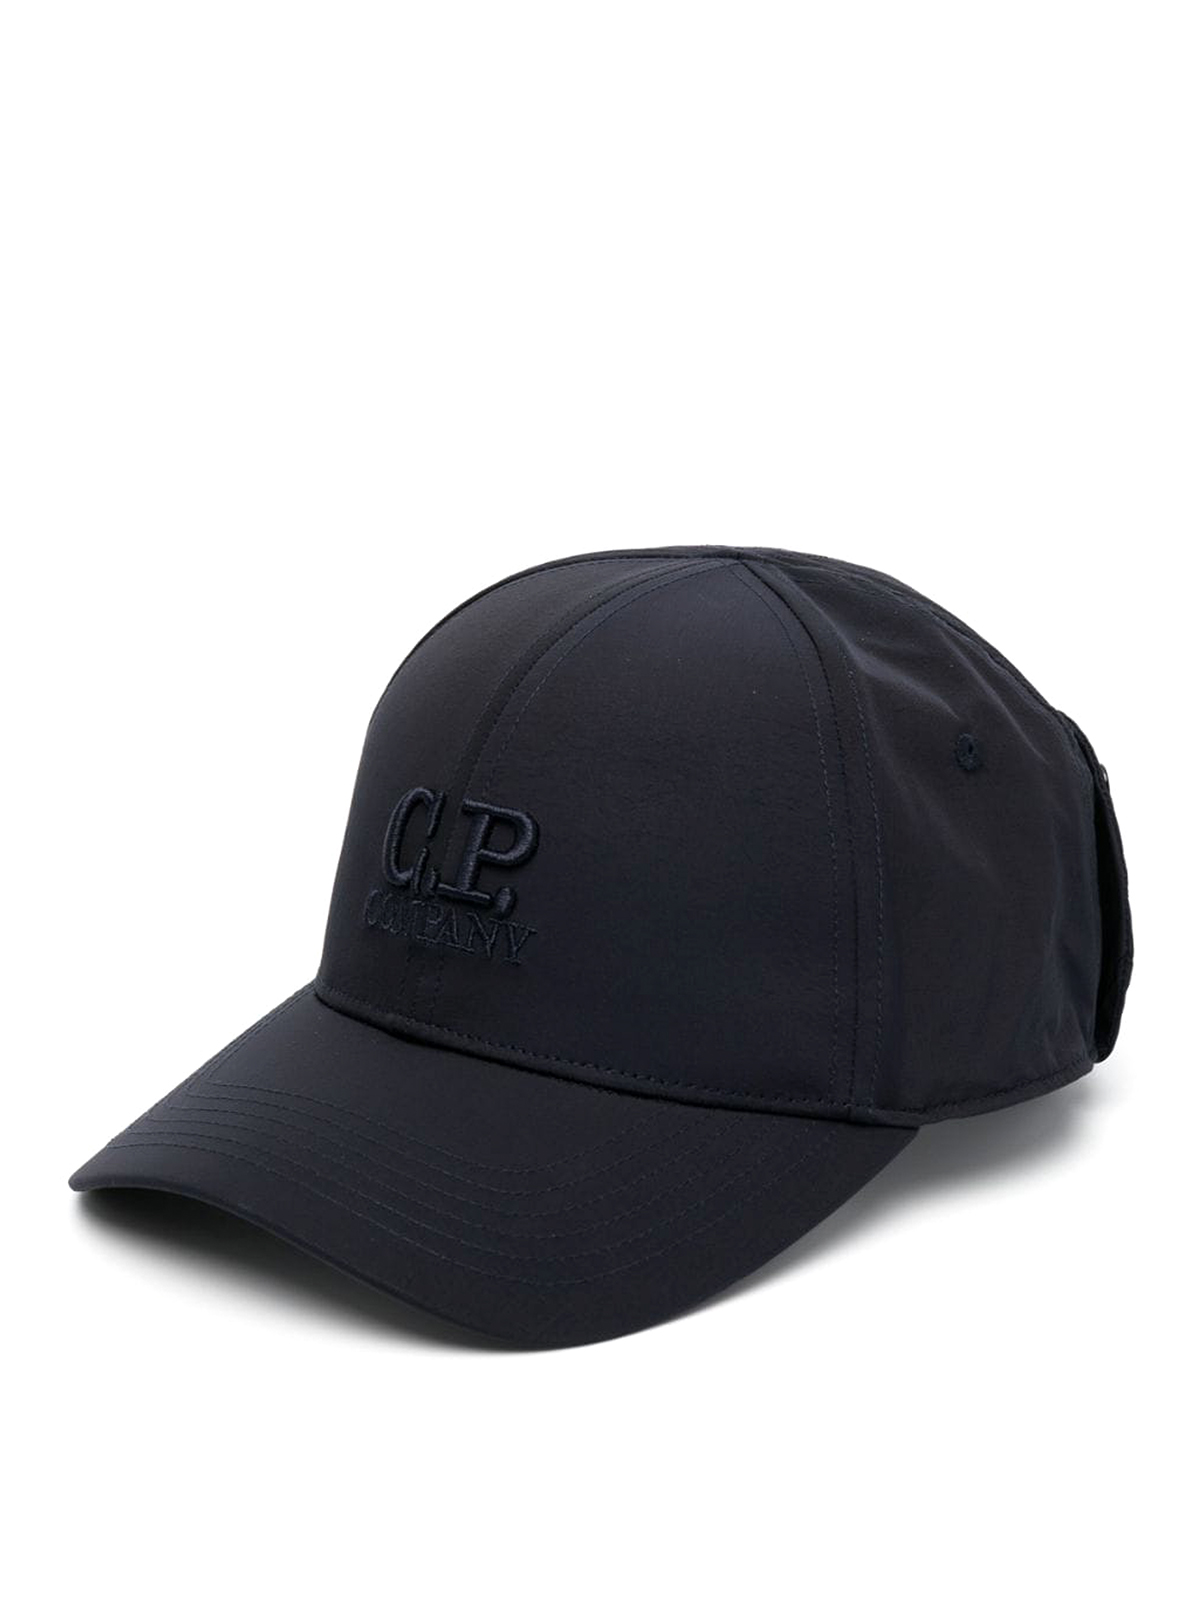 Hats & caps C.P. Company - Chrome-r baseball cap